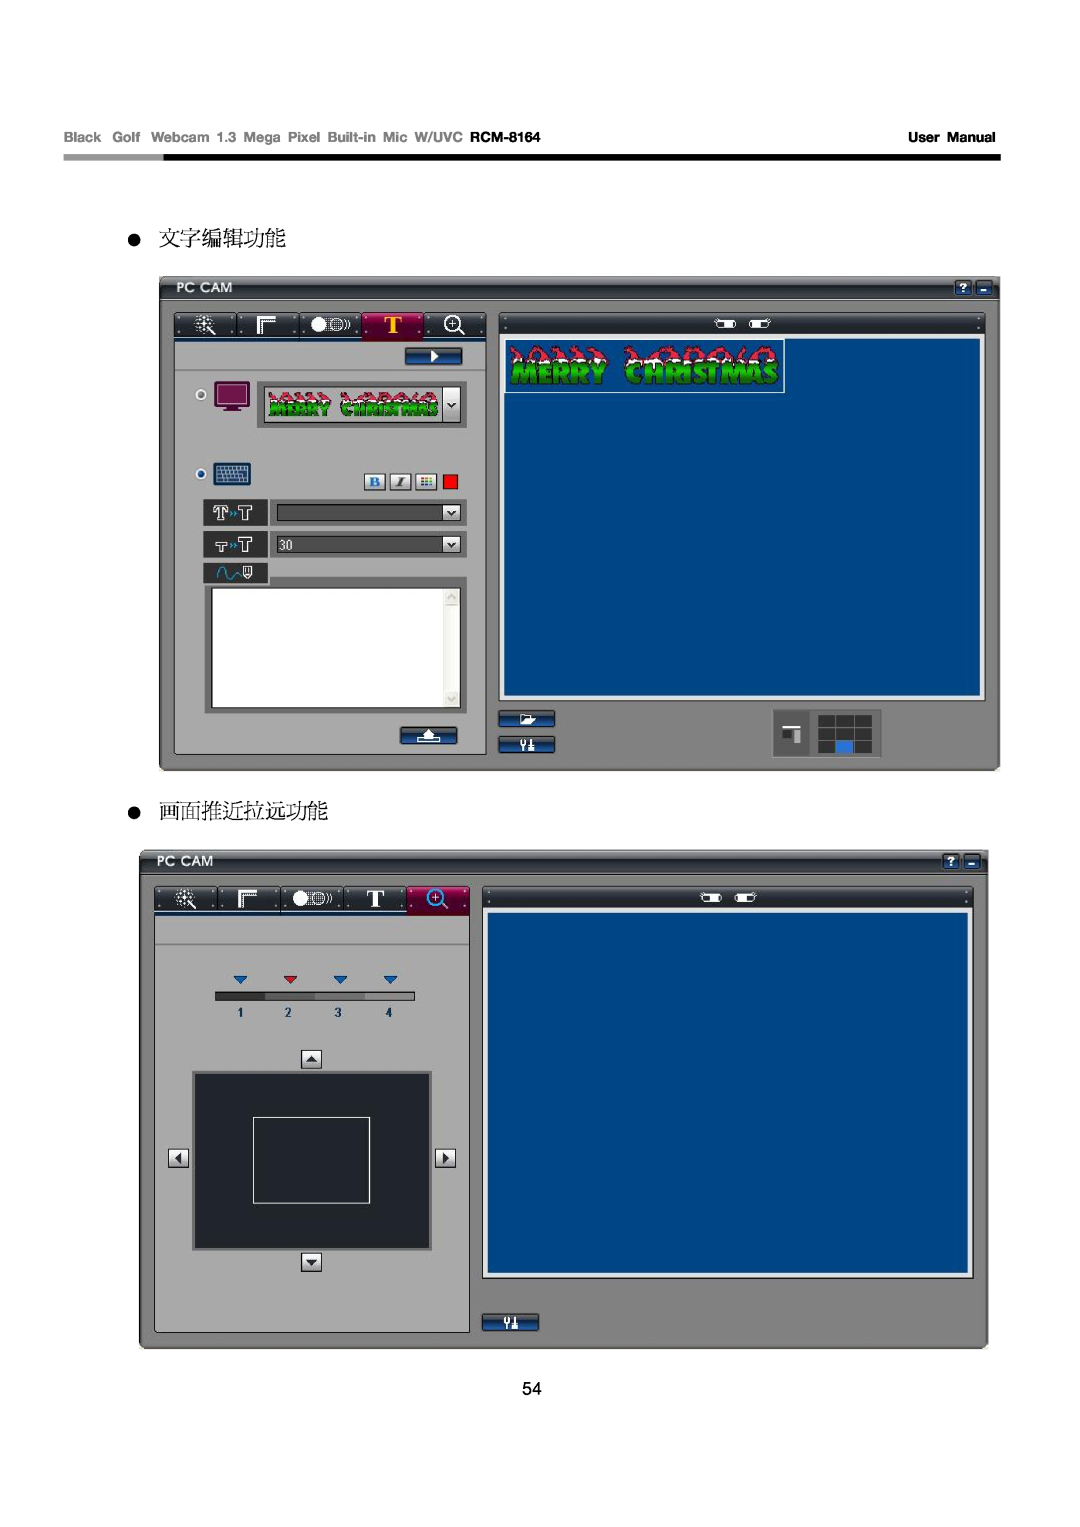 Rosewill user manual 文字编辑功能 画面推近拉远功能, Black Golf Webcam 1.3 Mega Pixel Built-in Mic W/UVC RCM-8164, User Manual 